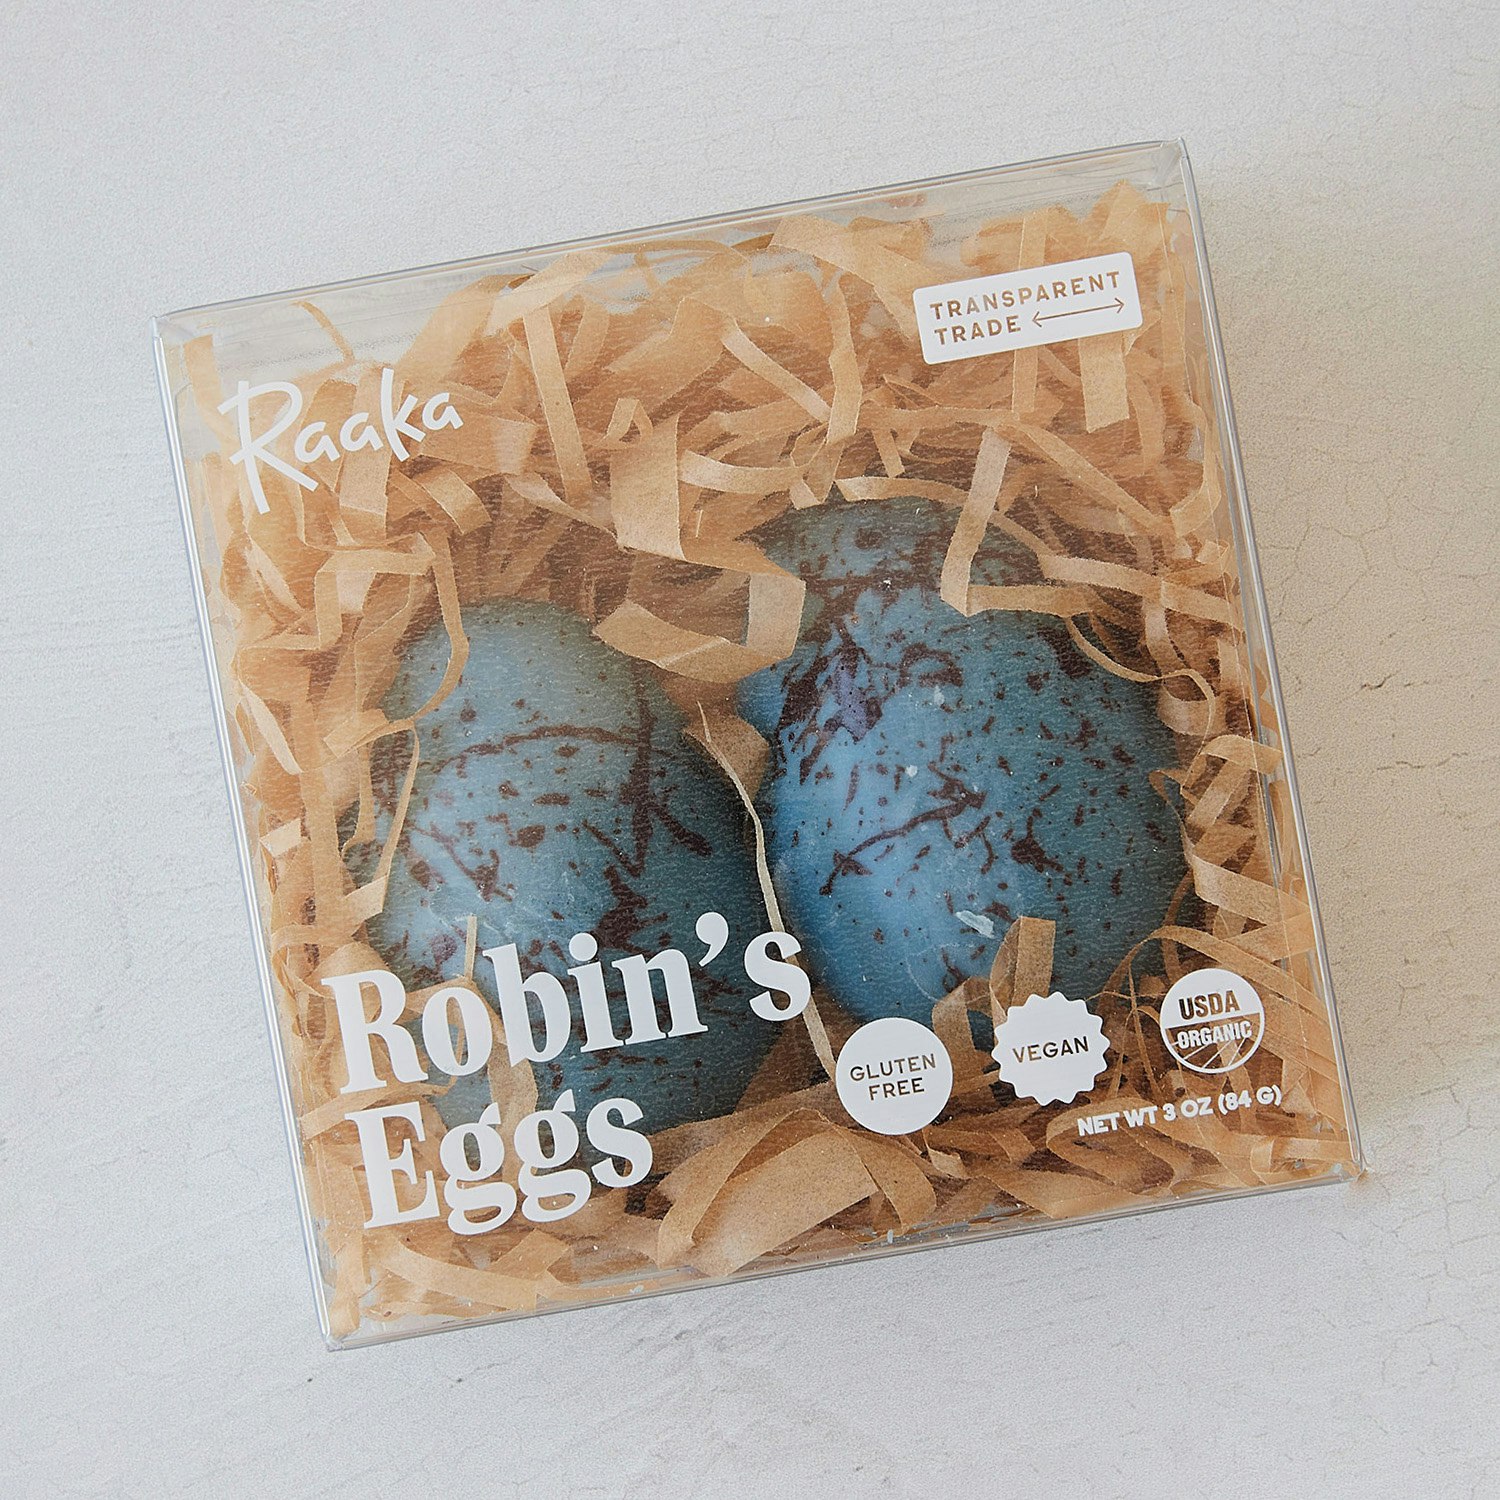 Raaka Chocolate Robin’s Eggs